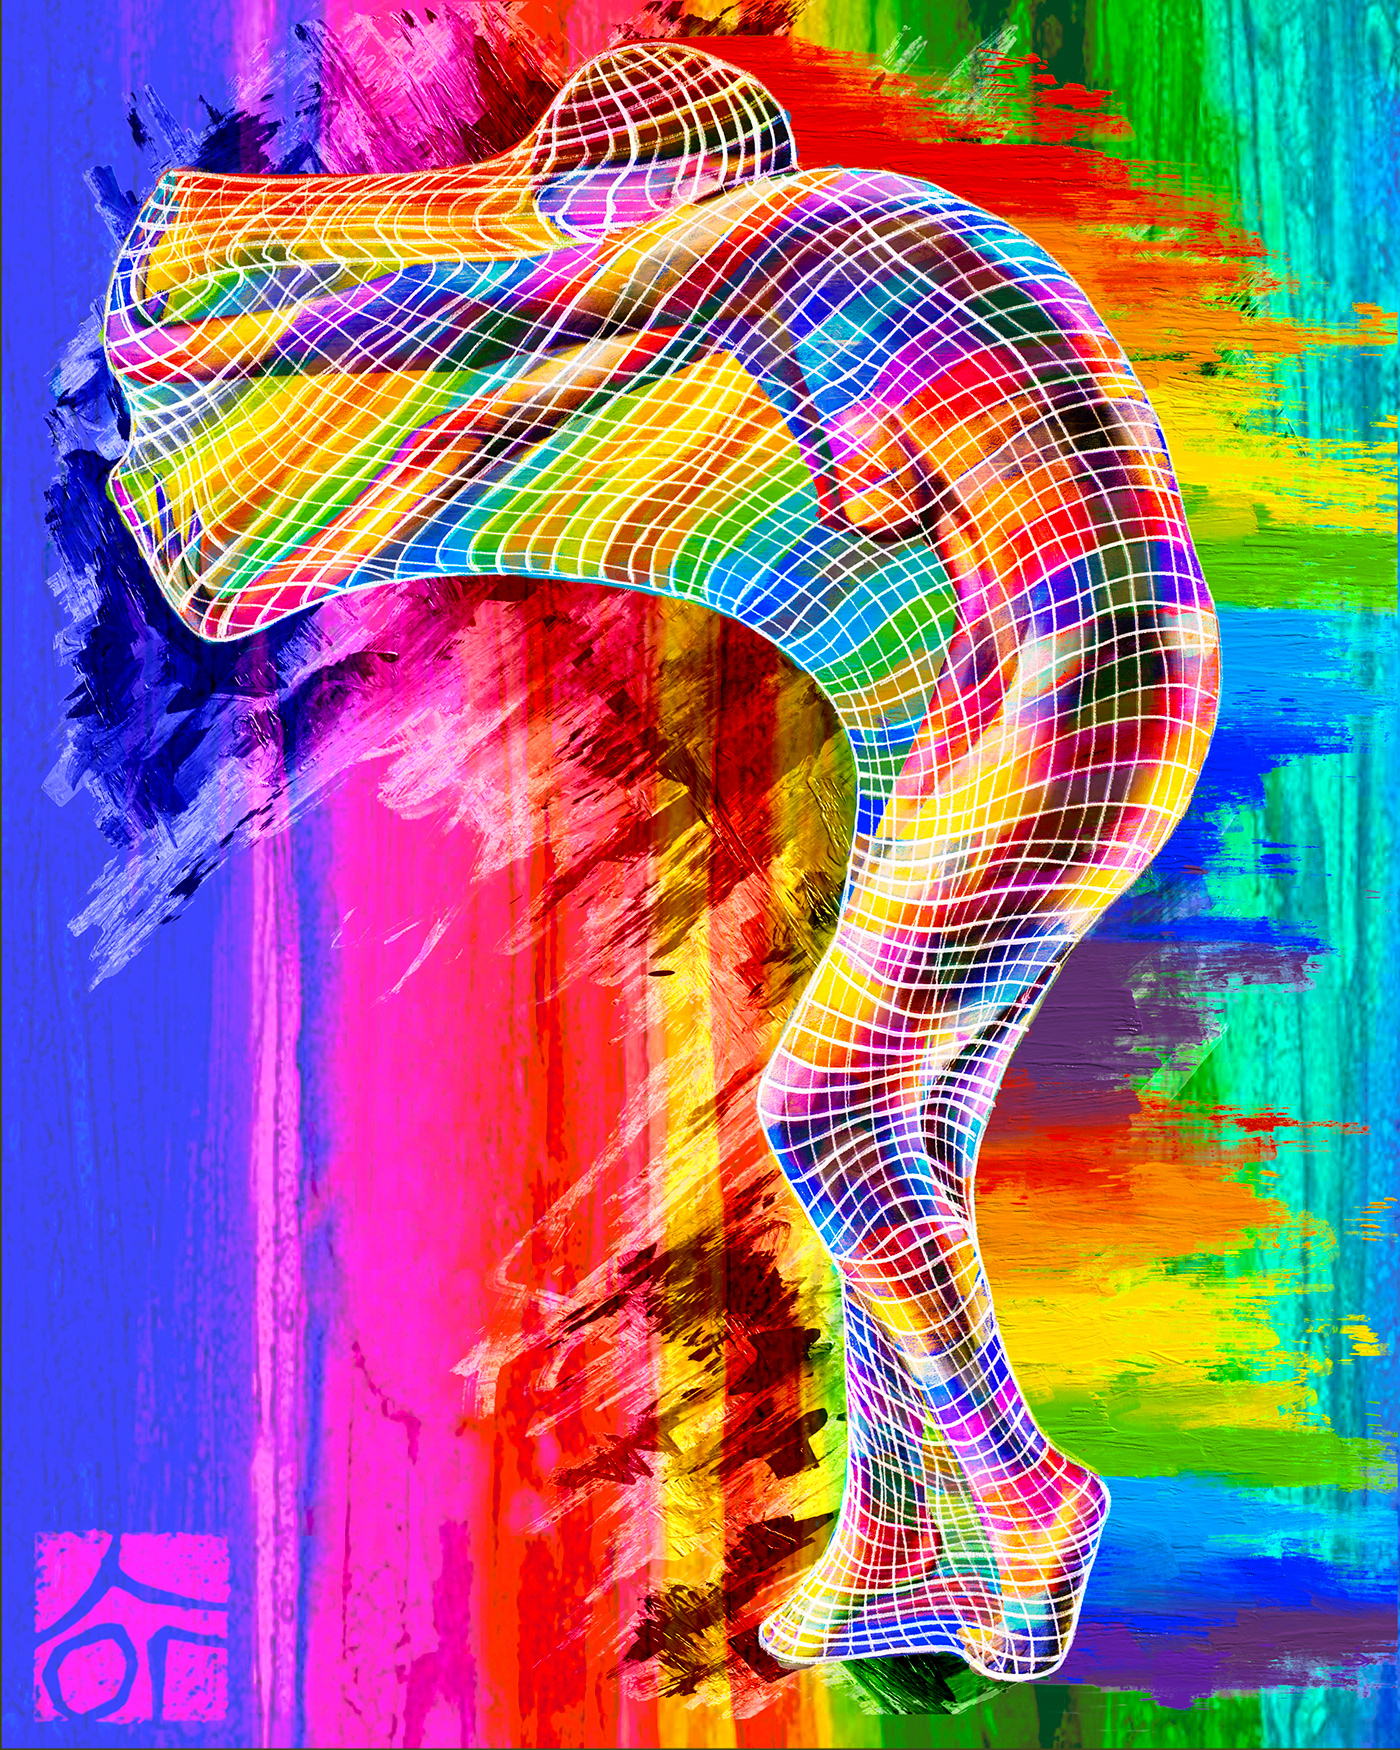 art artwork pride month Love equality equal rights LGBTQ+ rainbow